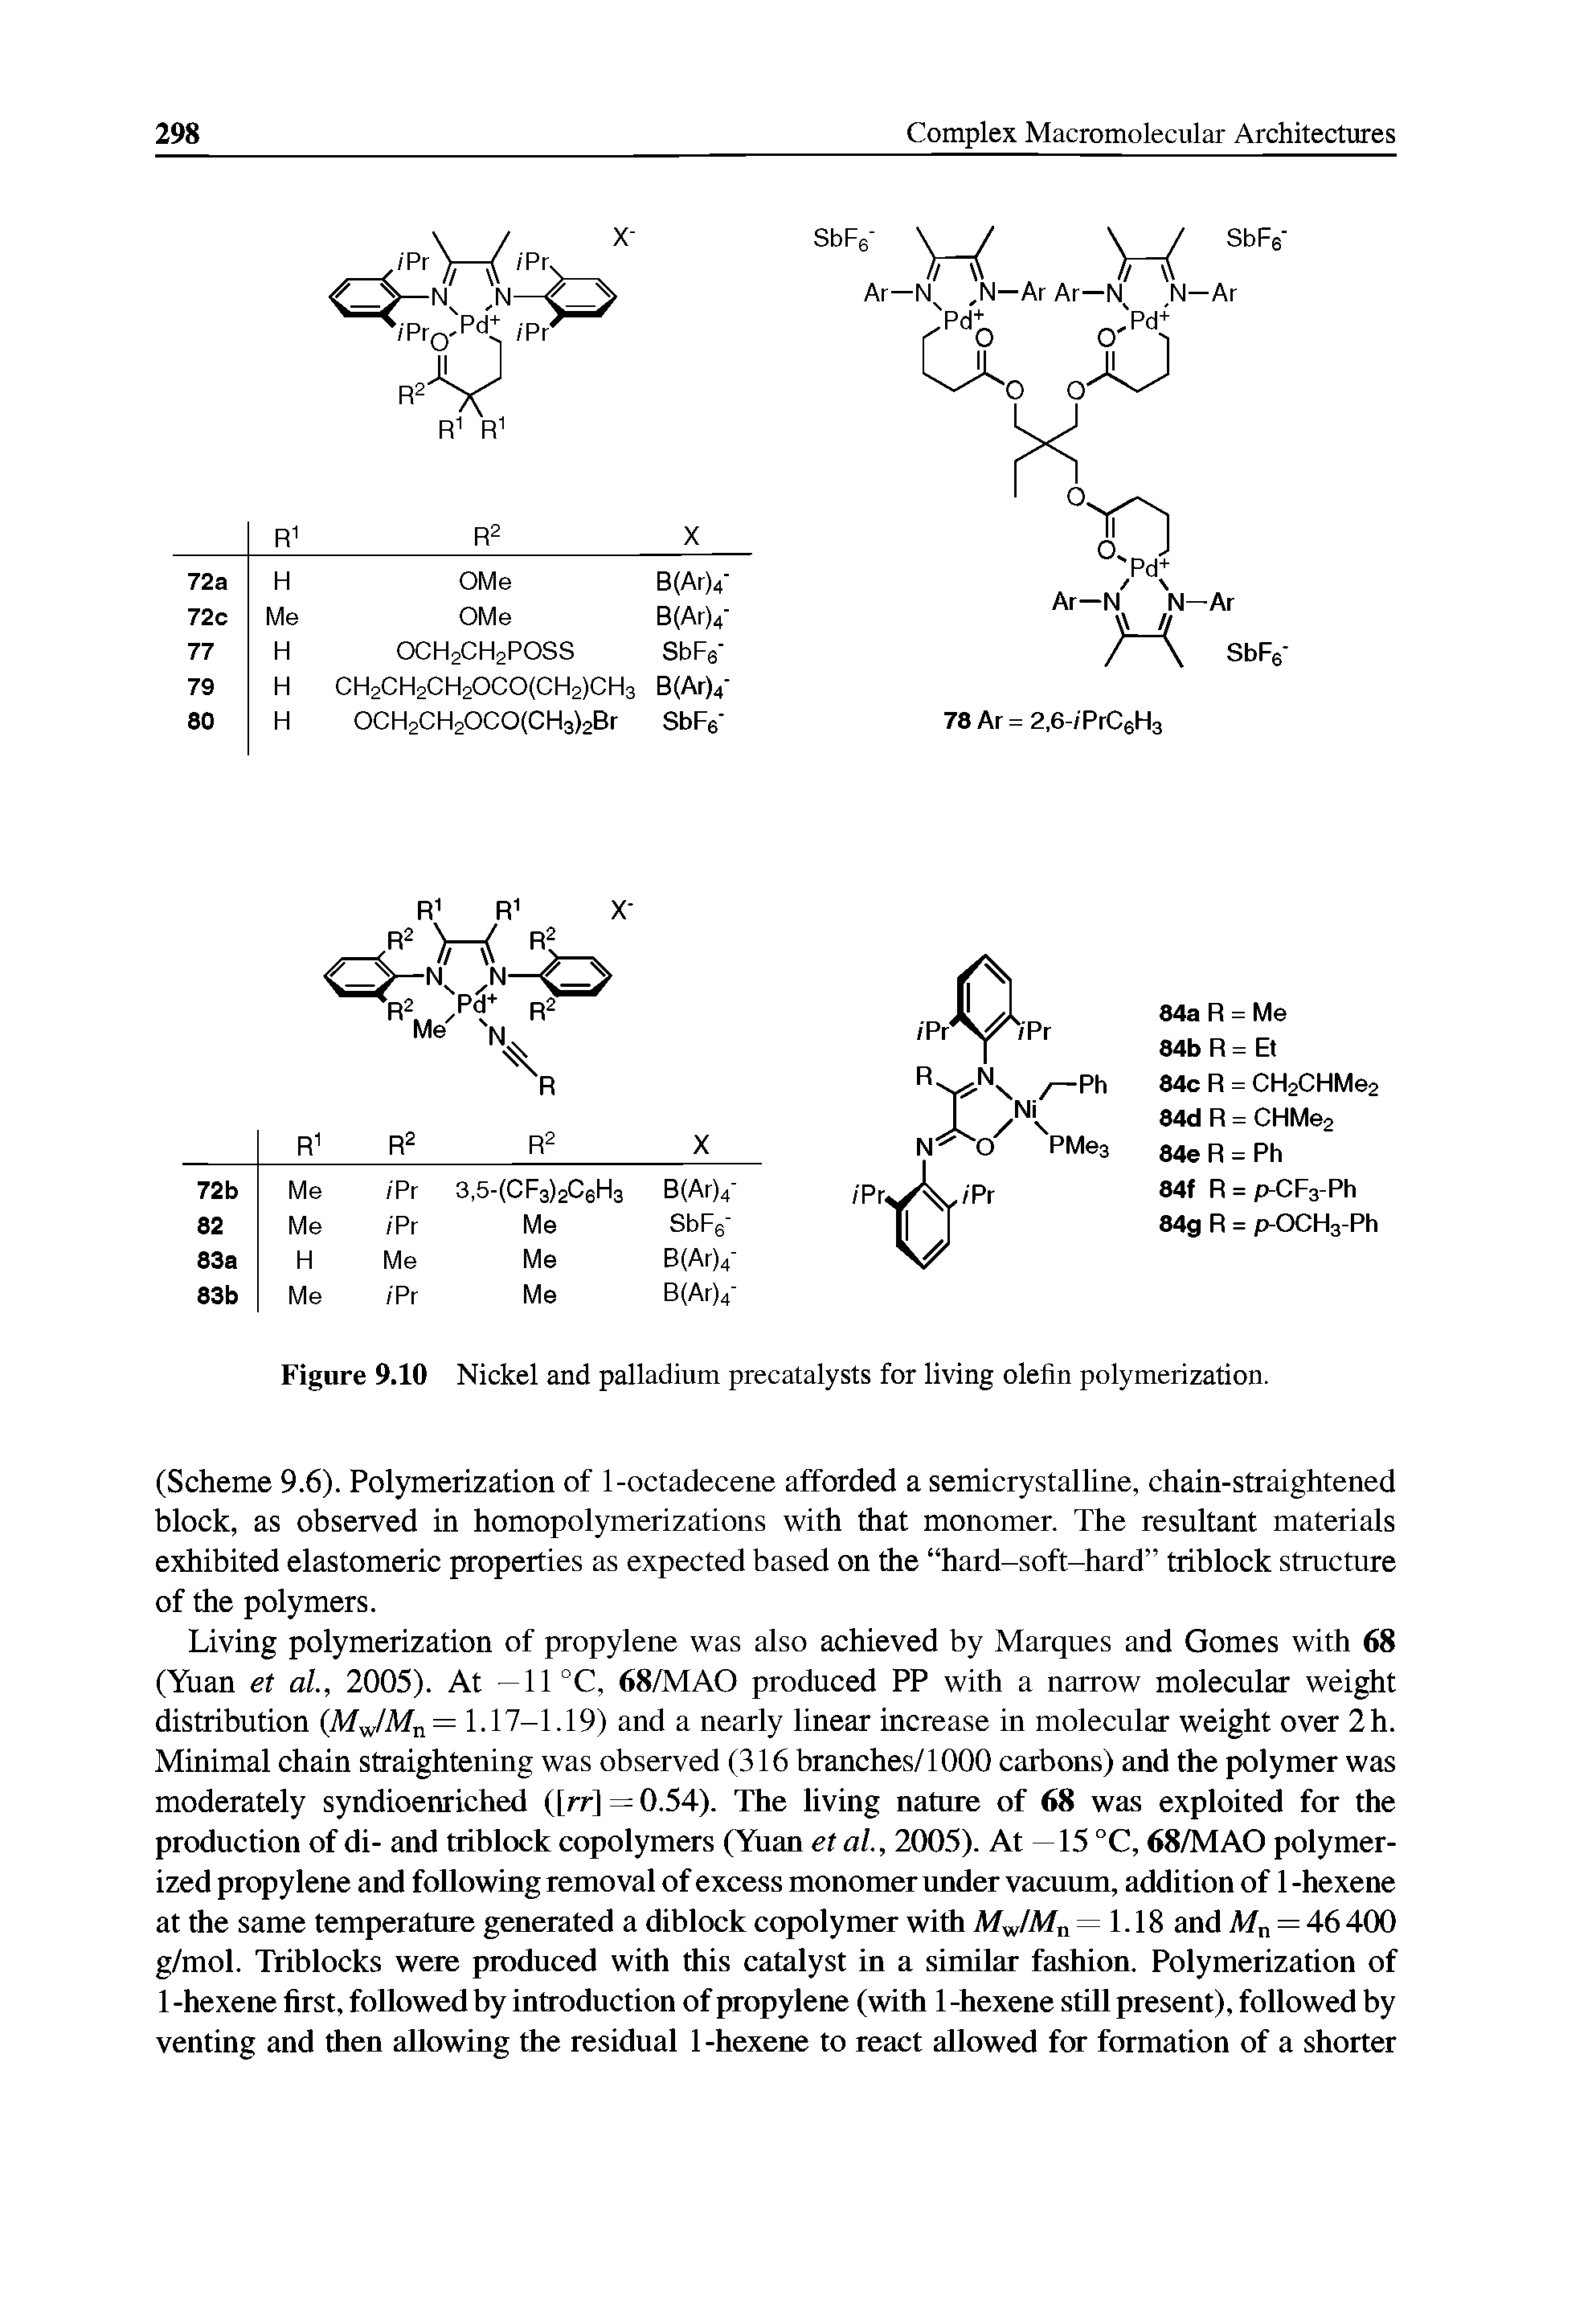 Figure 9.10 Nickel and palladium precatalysts for living olefin polymerization.